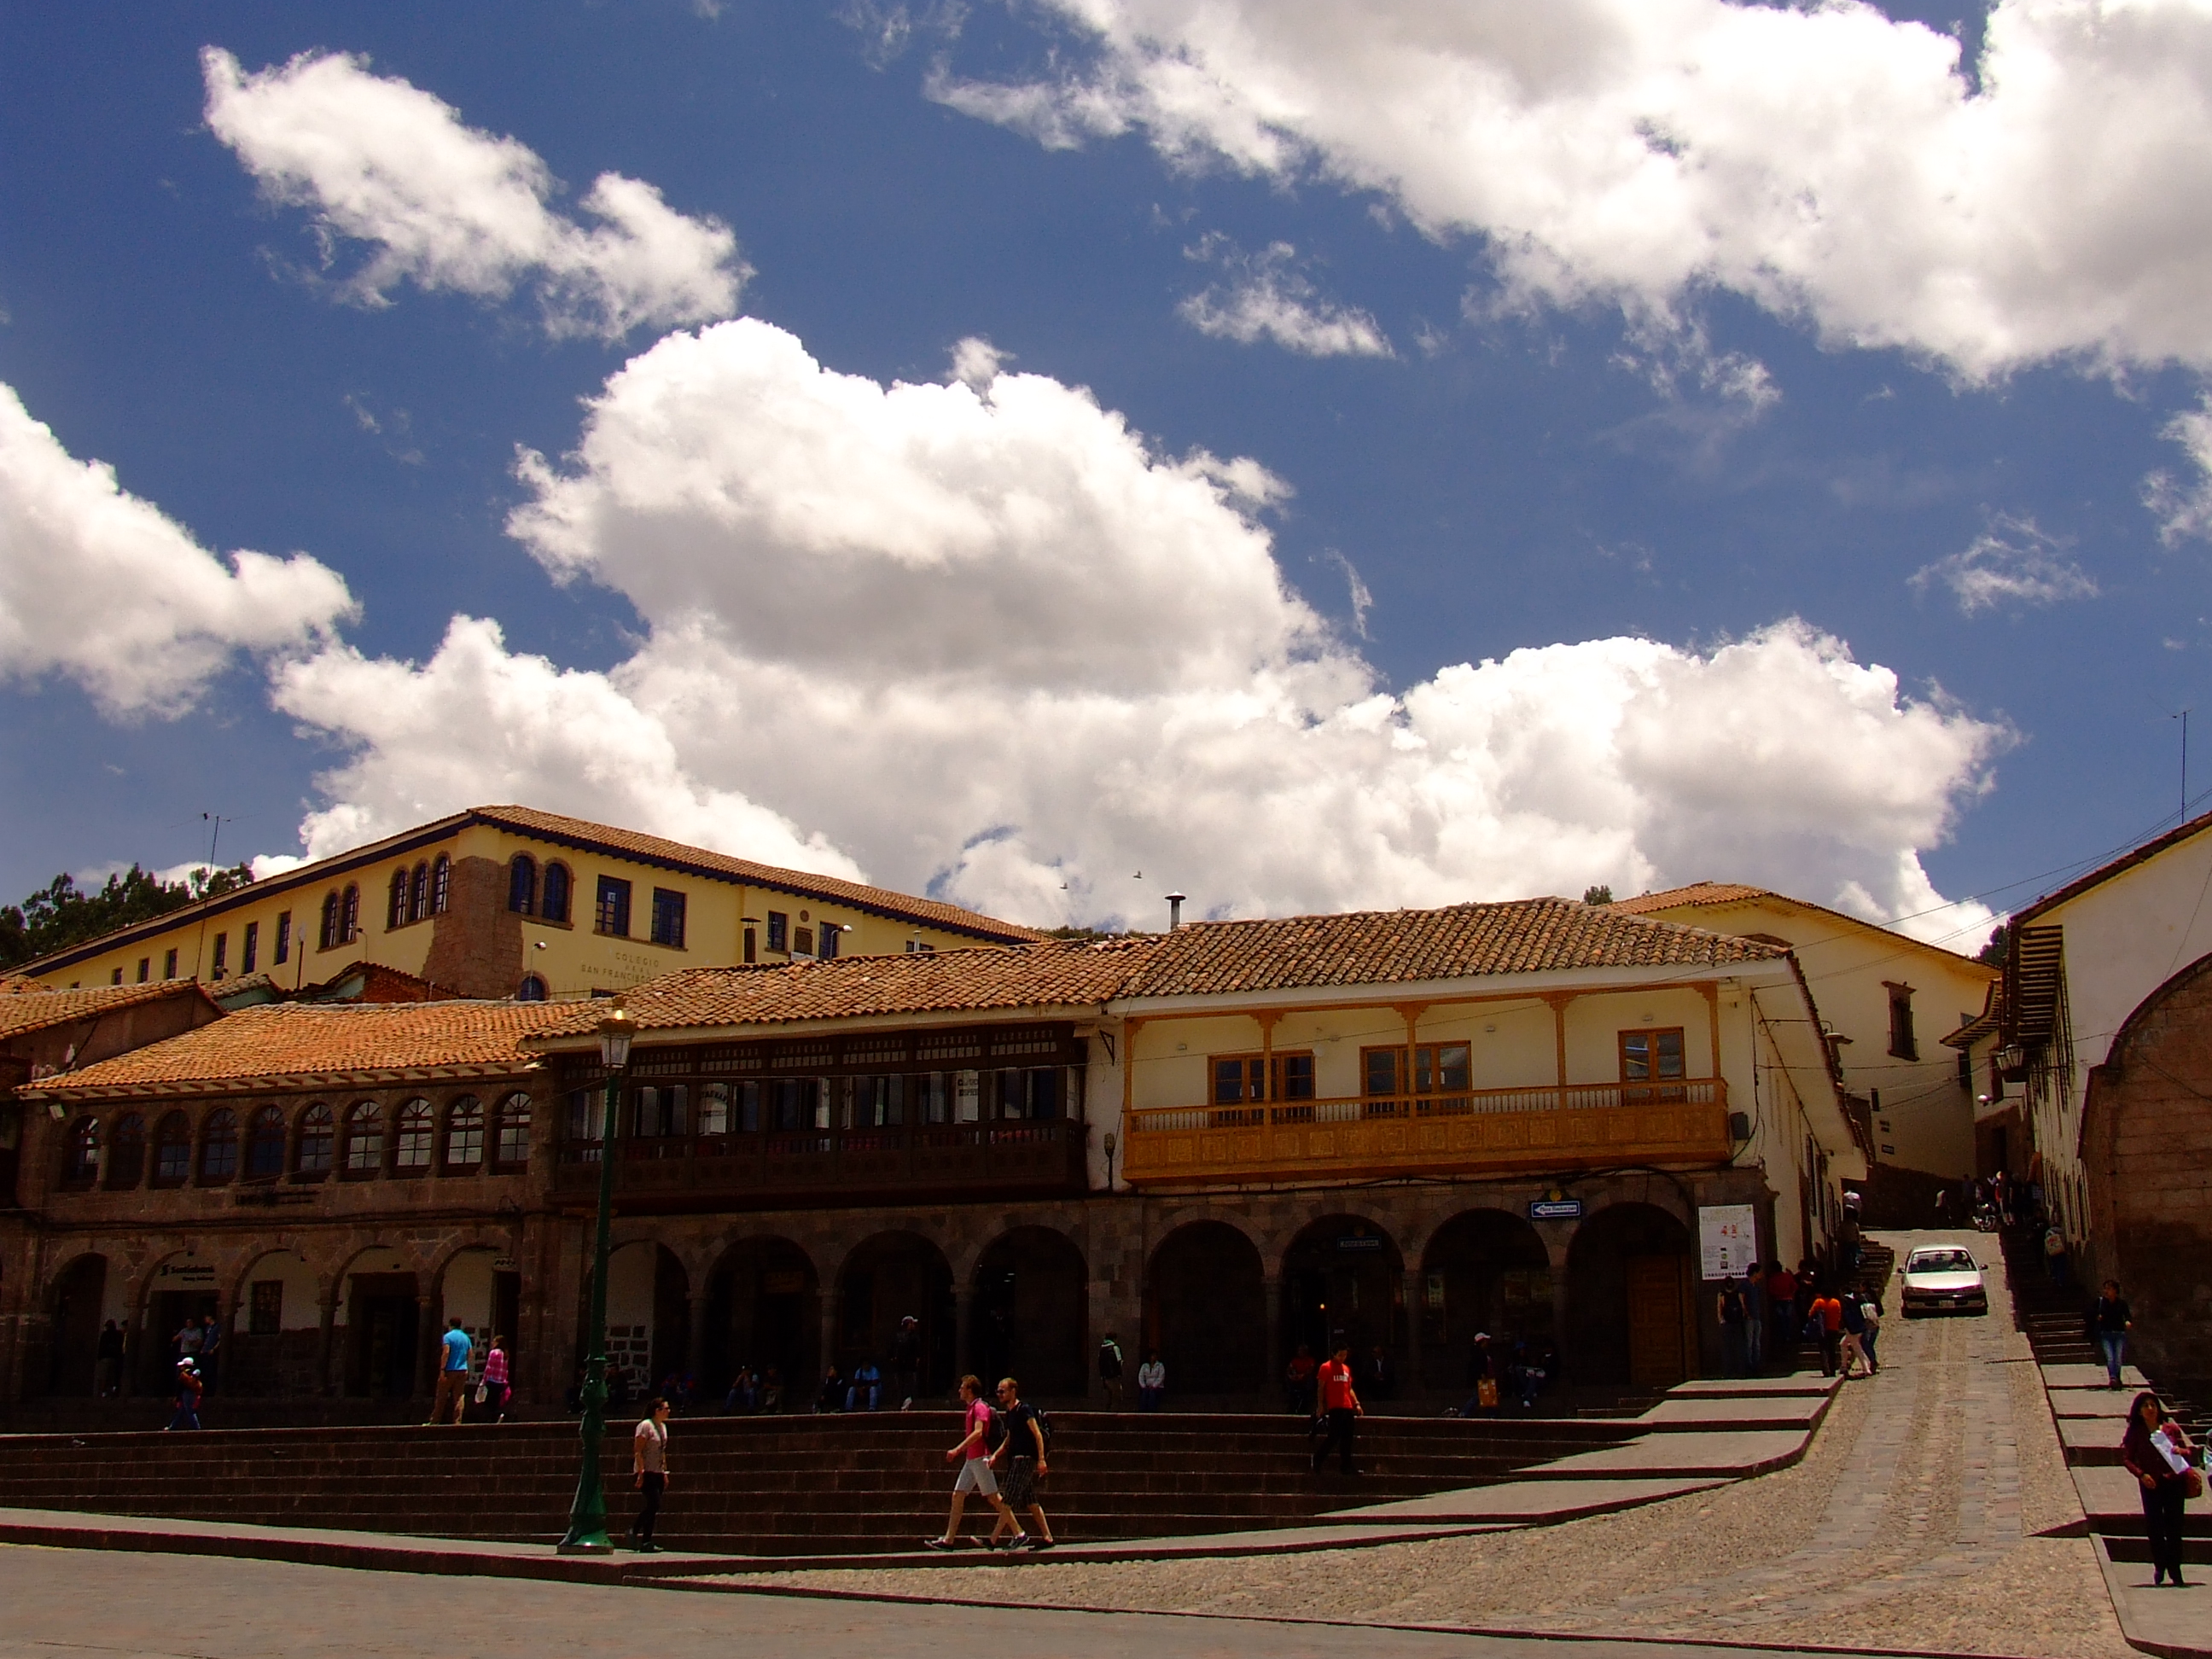 La esquina centro histórico, Cusco, Perú